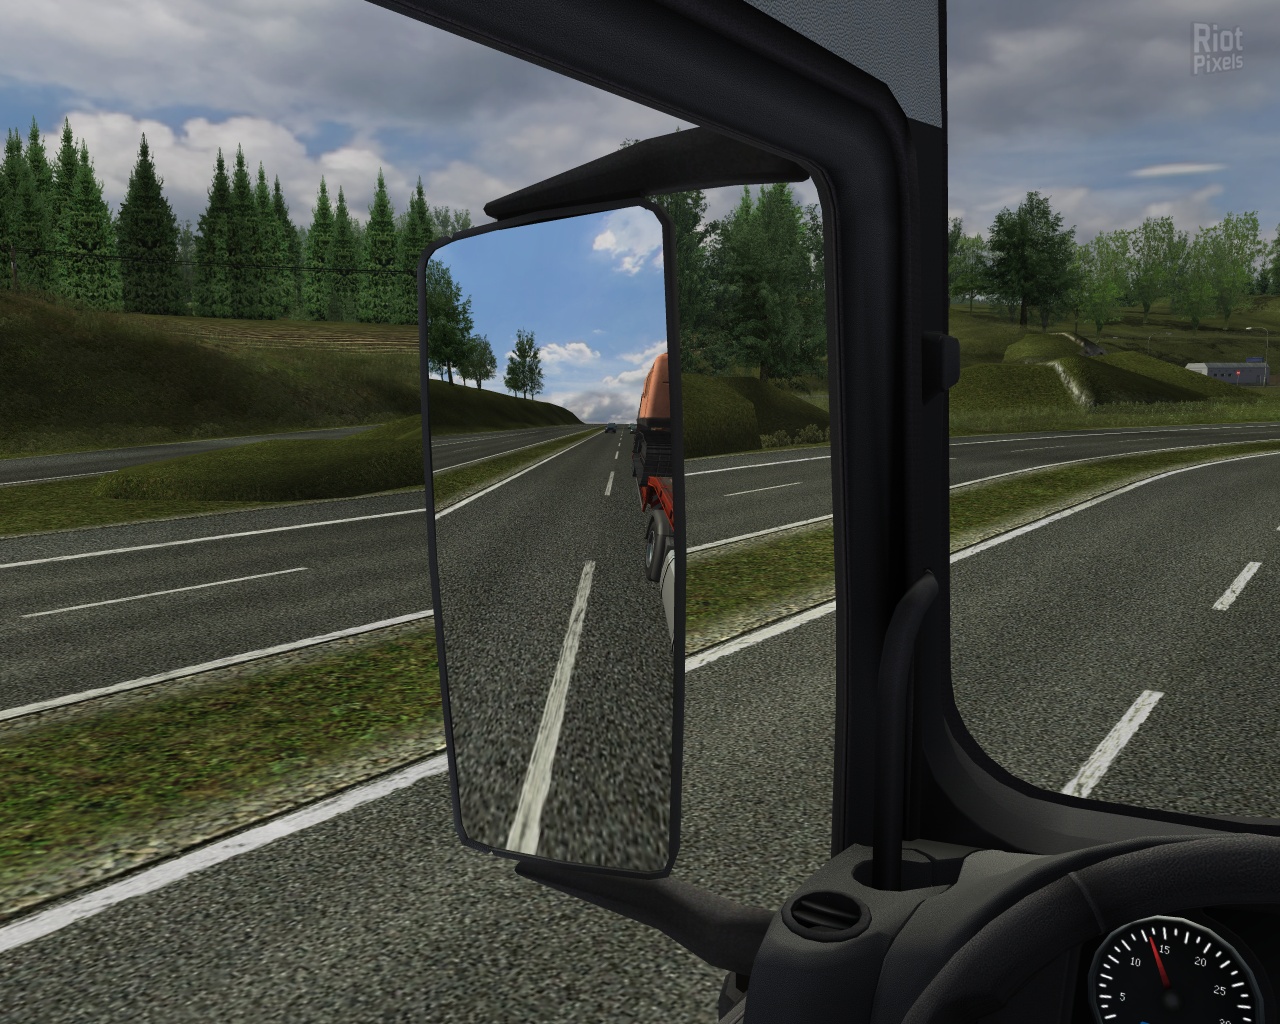 Ukraine German Truck Simulator